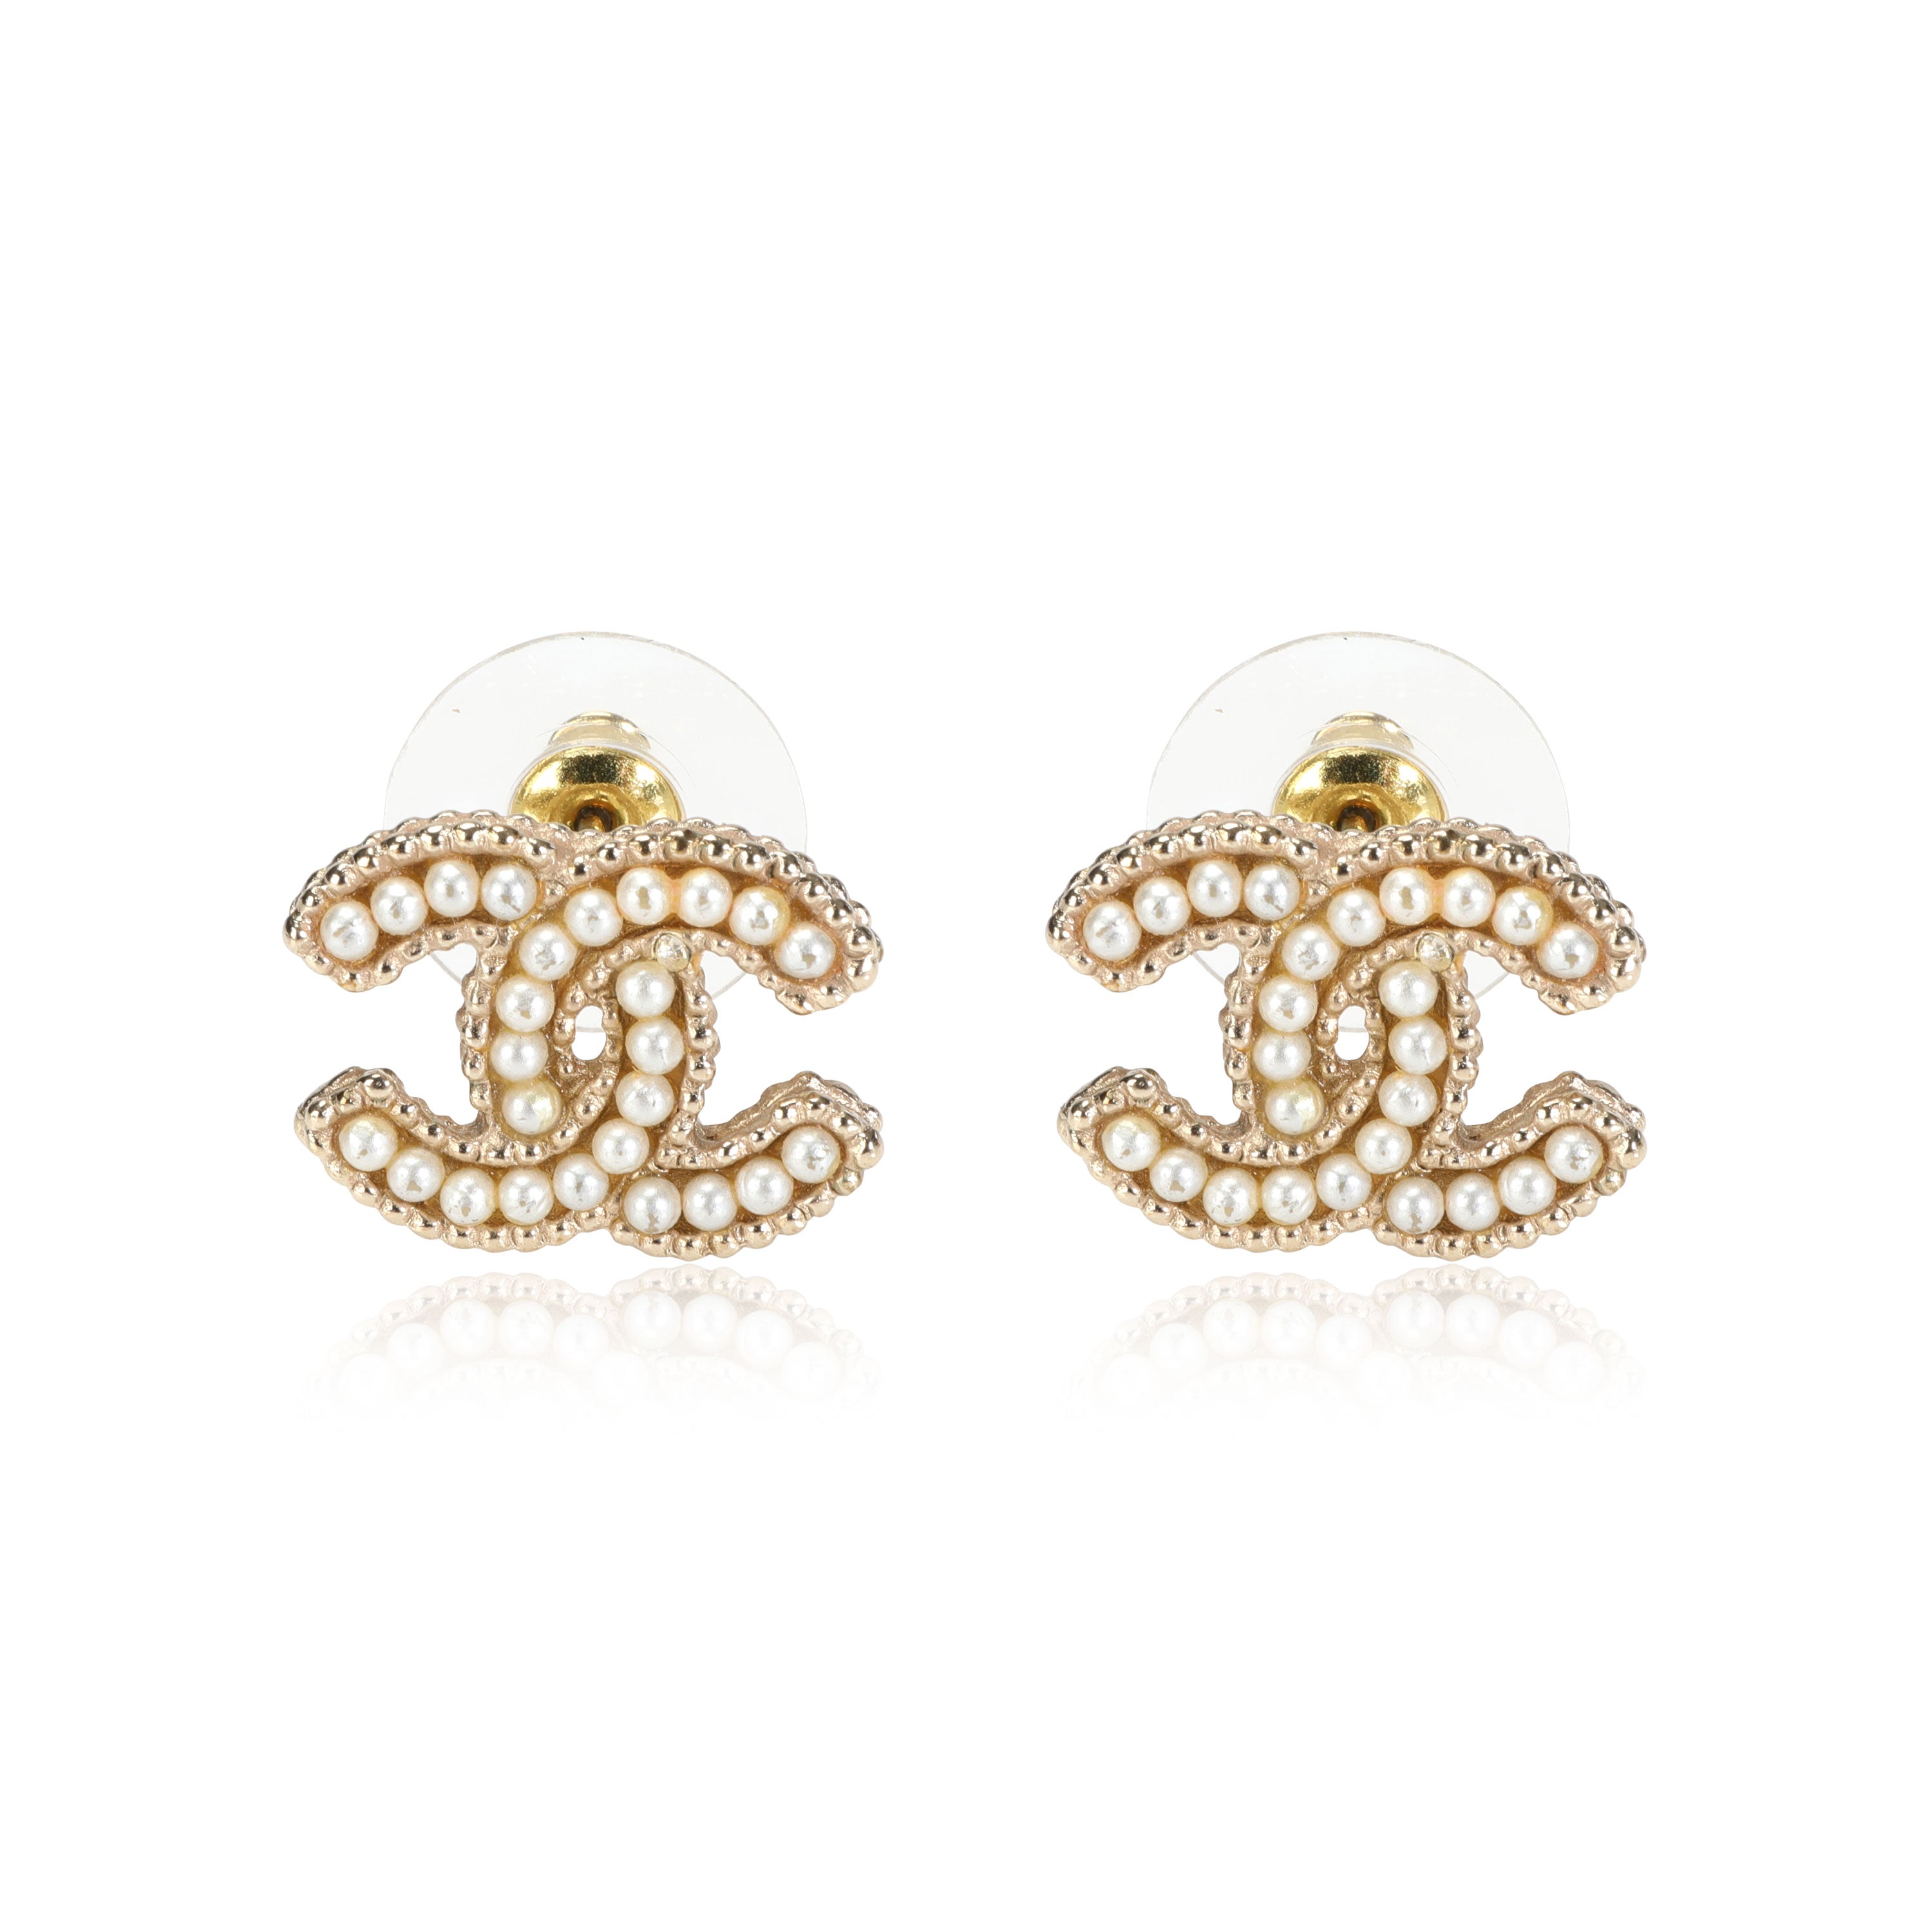 Authentic Chanel small earrings. - Jewelry & Faux-Bijoux - 115632782